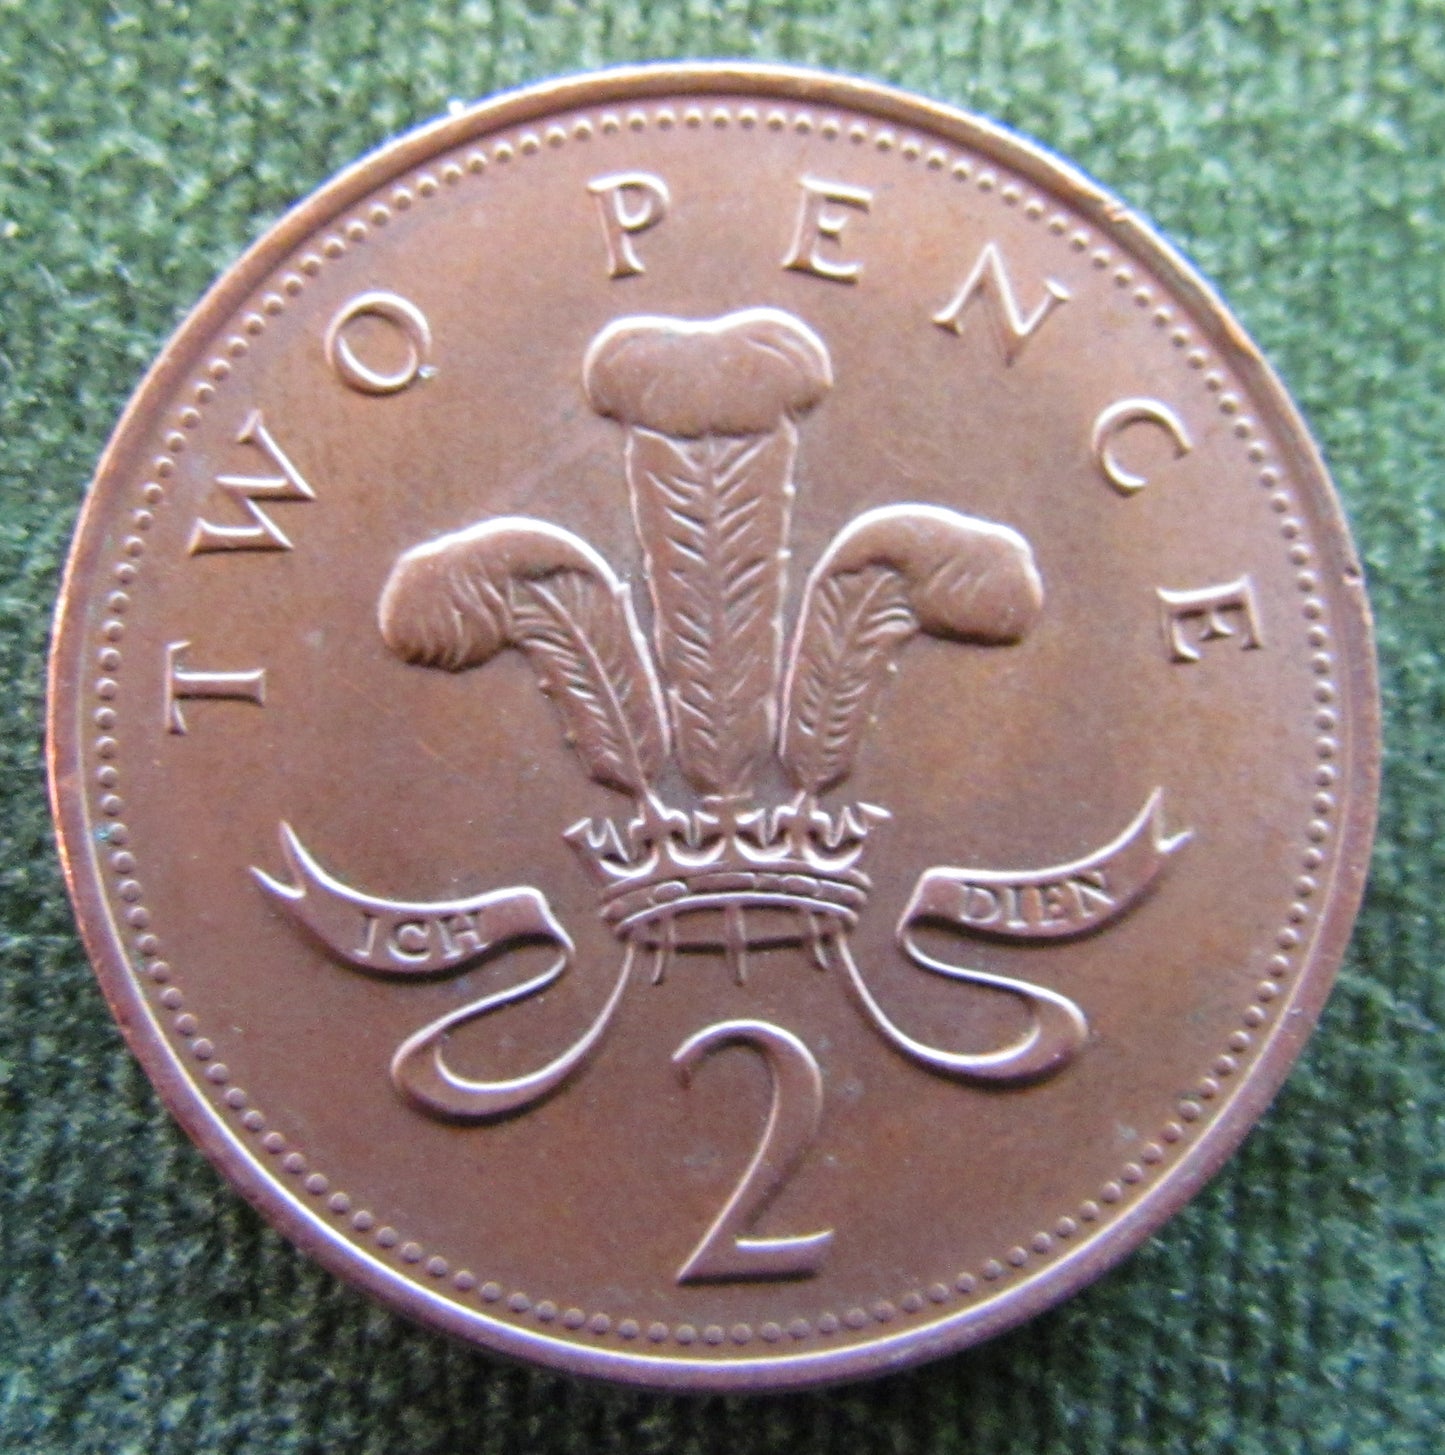 GB British UK English 1999 2 New Pence Queen Elizabeth II Coin